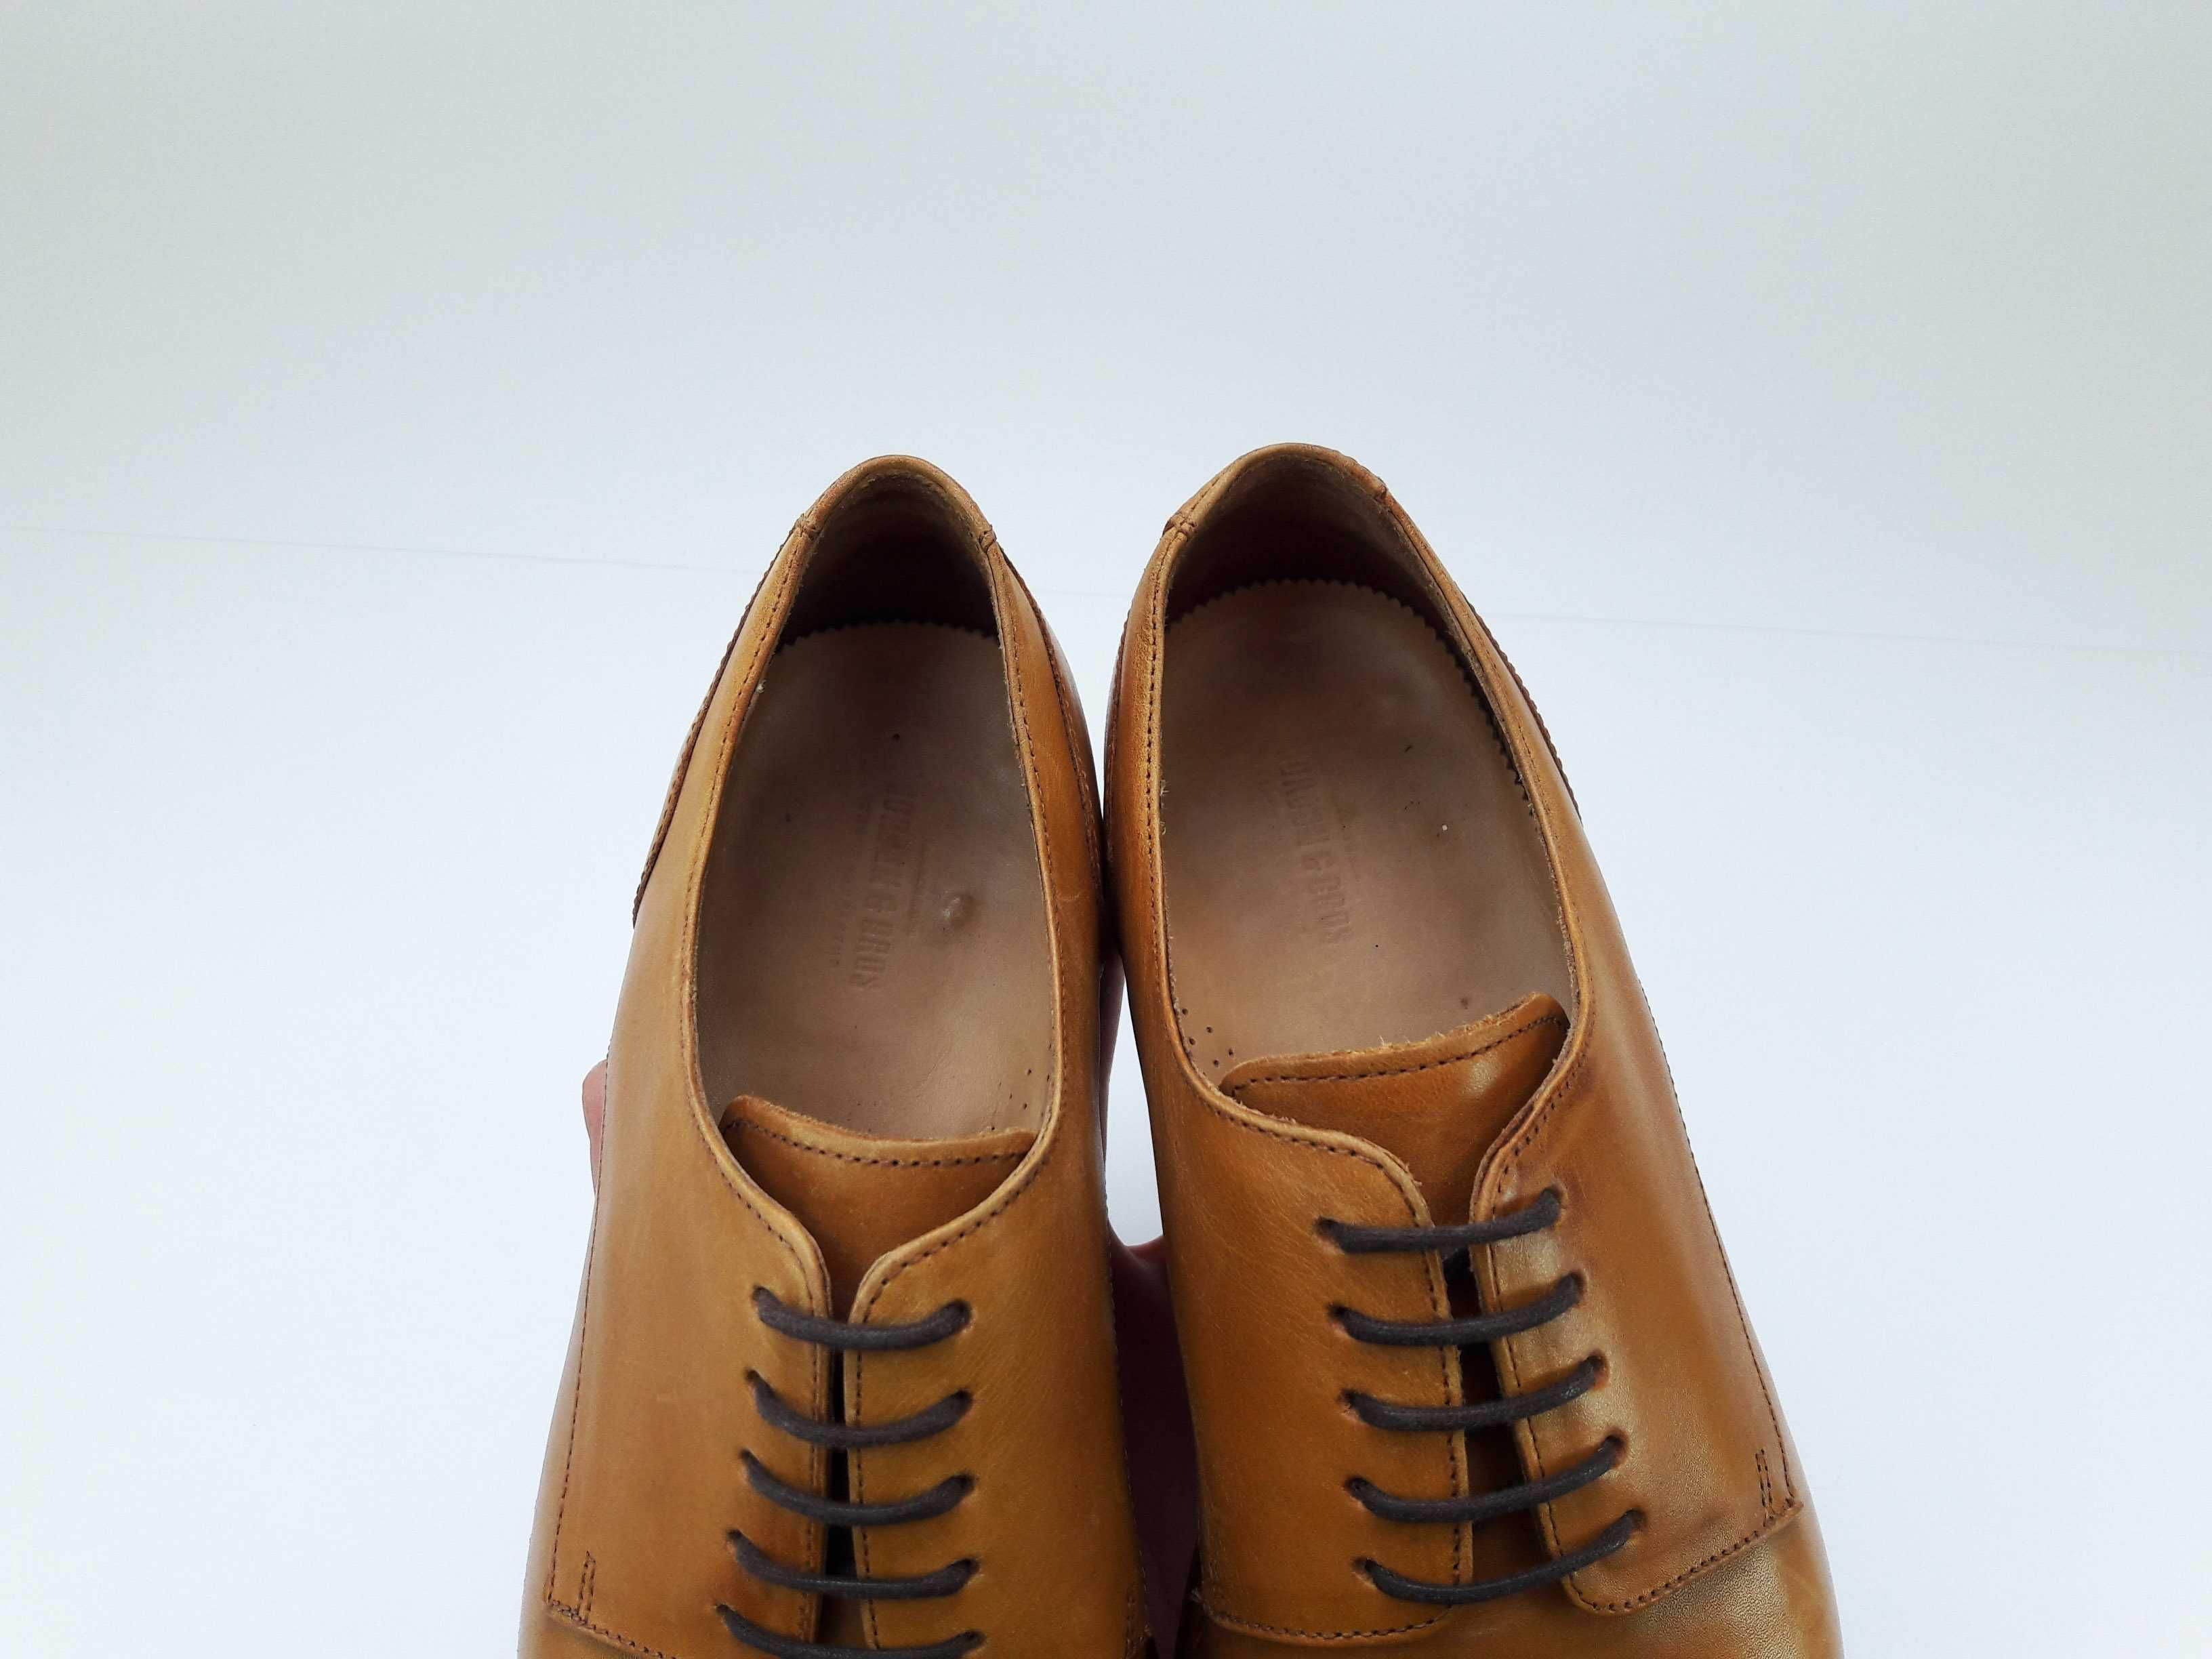 Gordon&Bros Made in Germany туфли туфлі 40 41 25.5 см